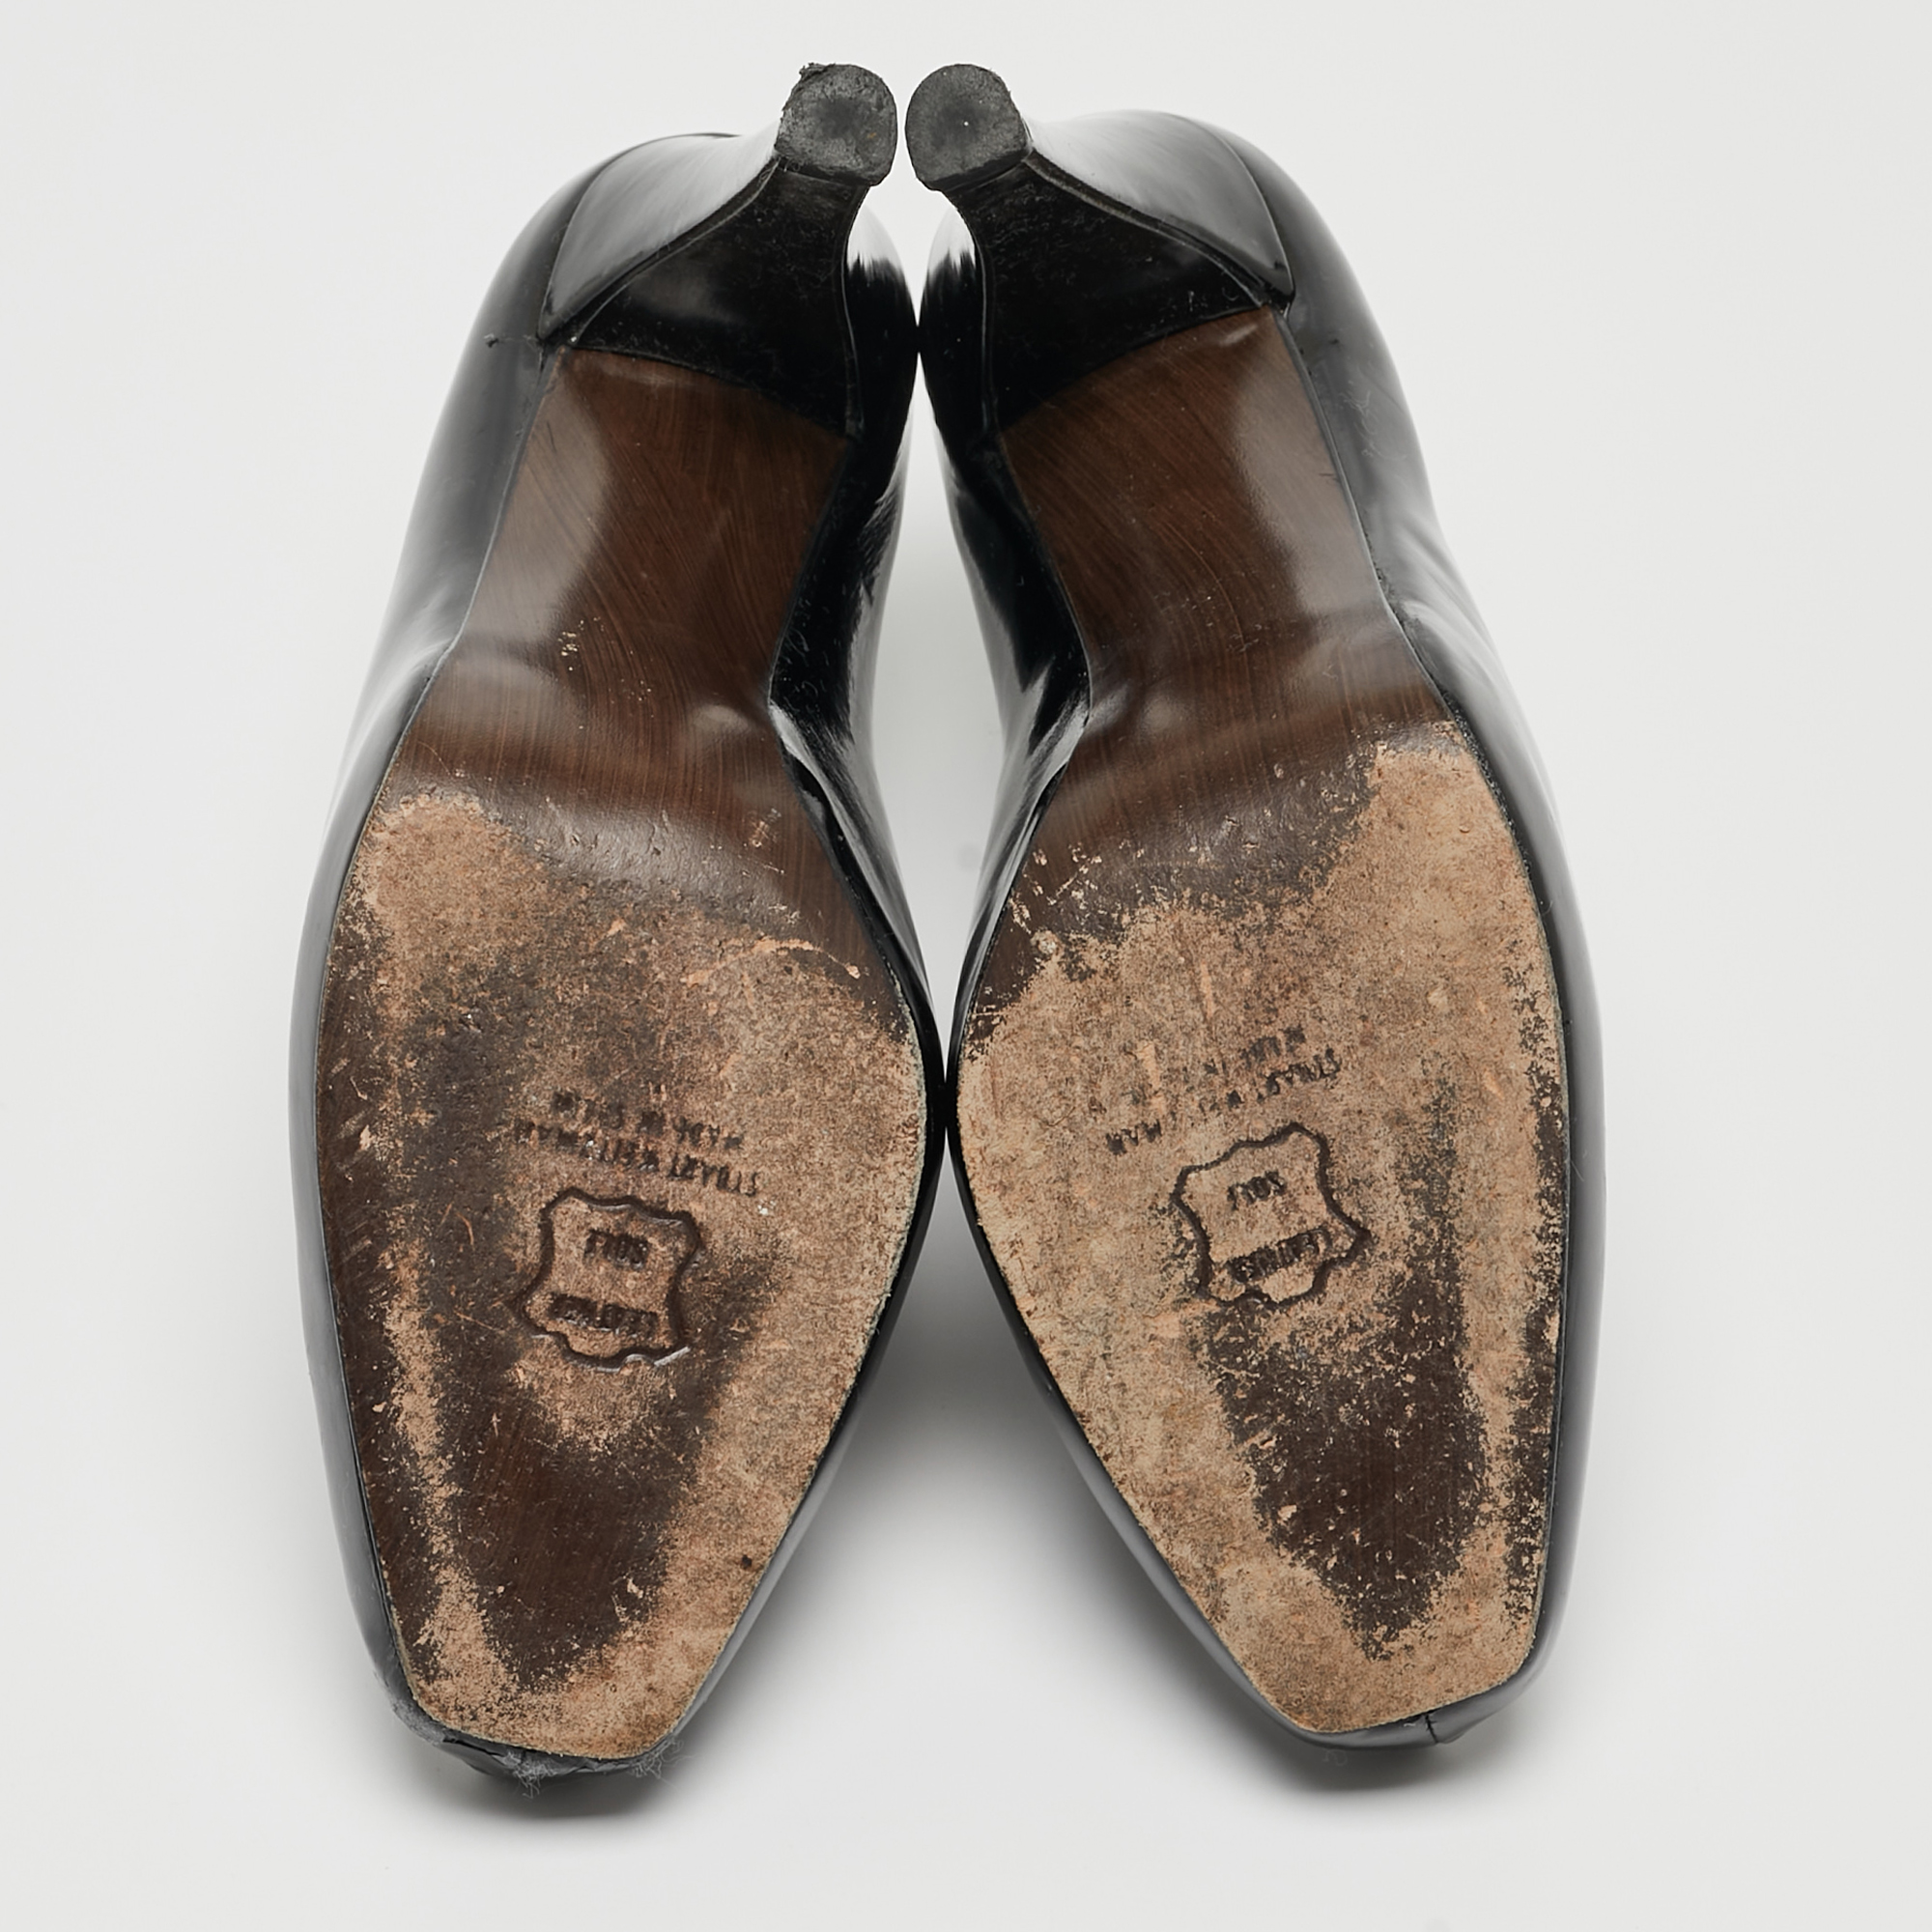 Stuart Weitzman Black Patent Leather Loafer Pumps Size 39